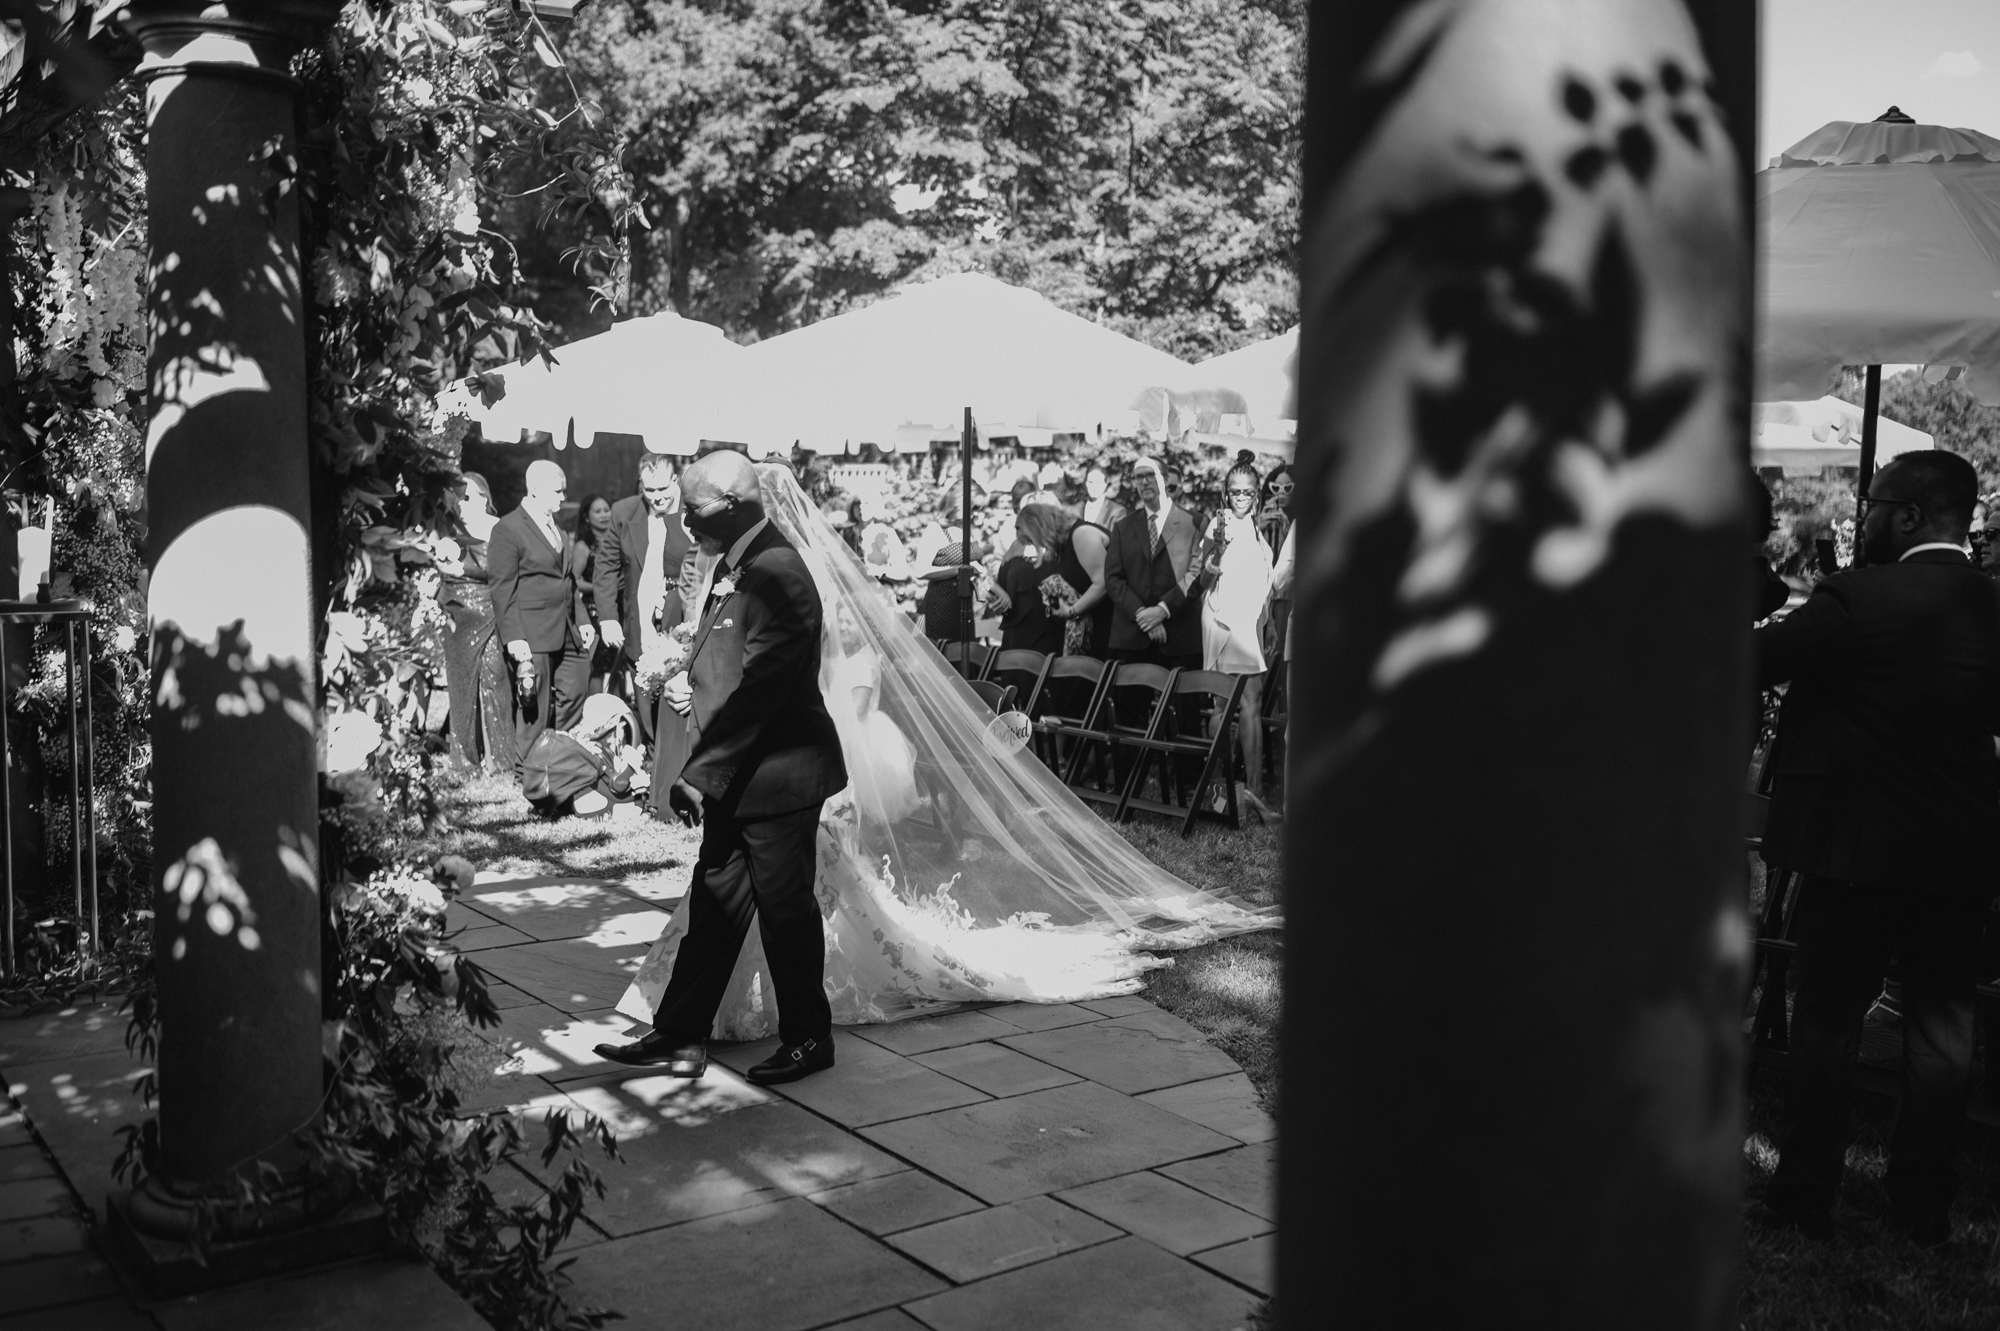 curtis arboretum wedding photography pennsylvania 01 64